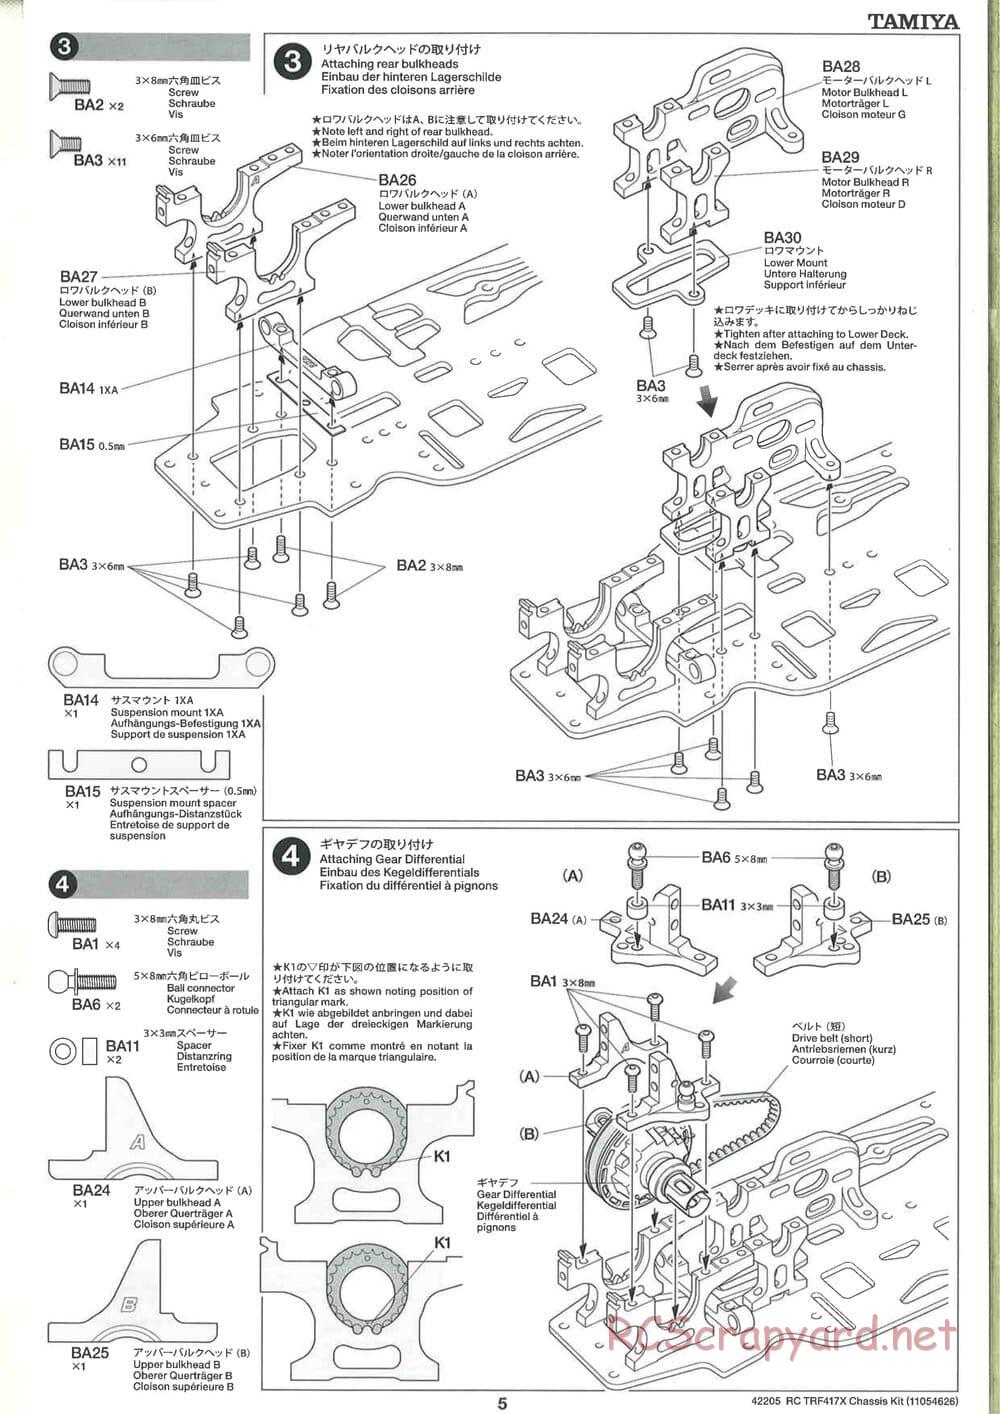 Tamiya - TRF417X Chassis - Manual - Page 5